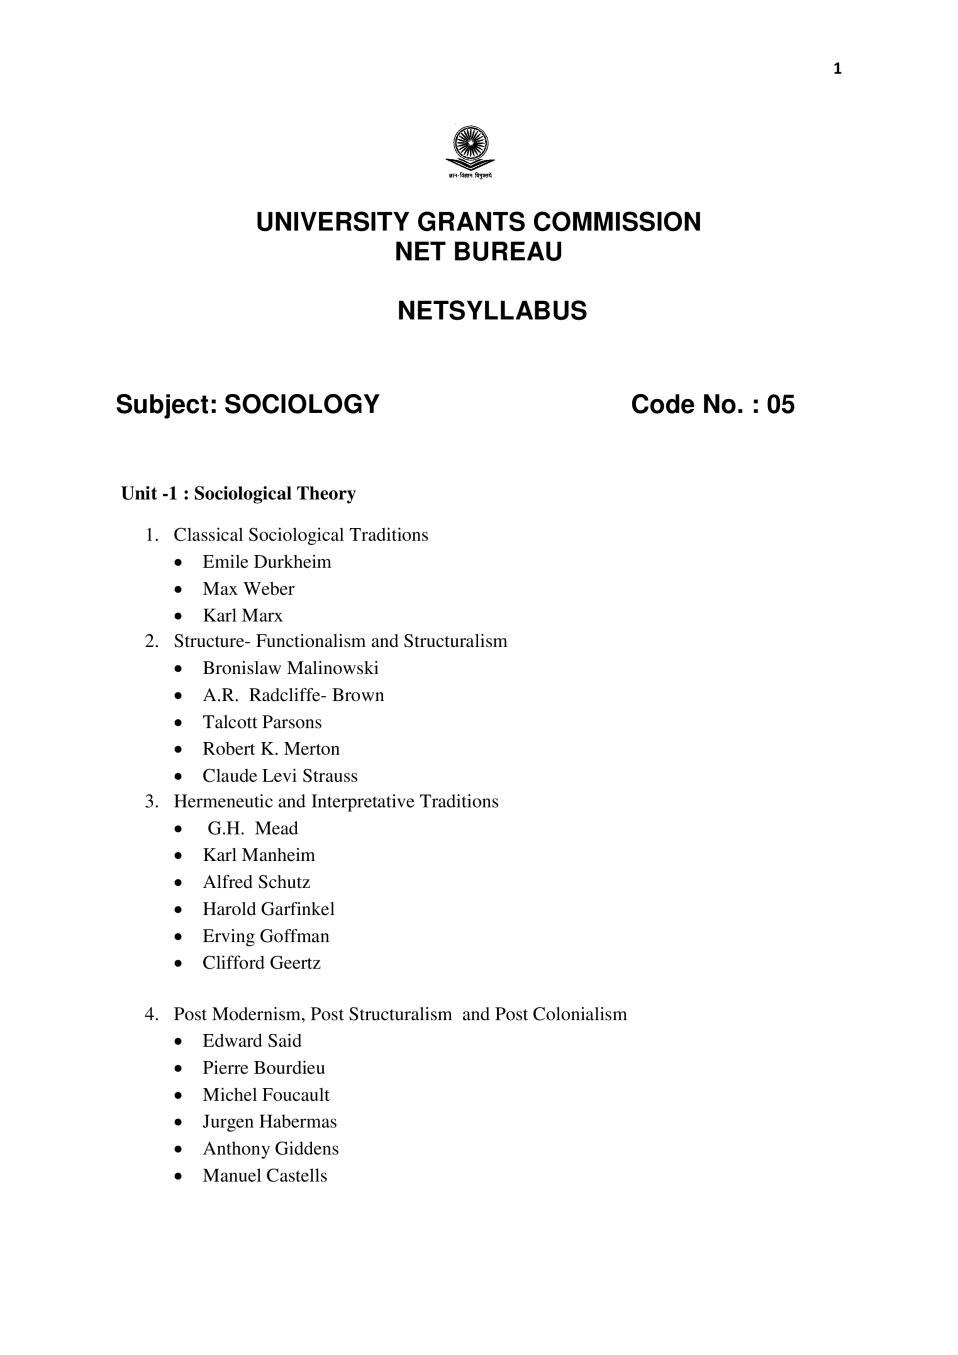 UGC NET Syllabus for Sociology 2020 - Page 1